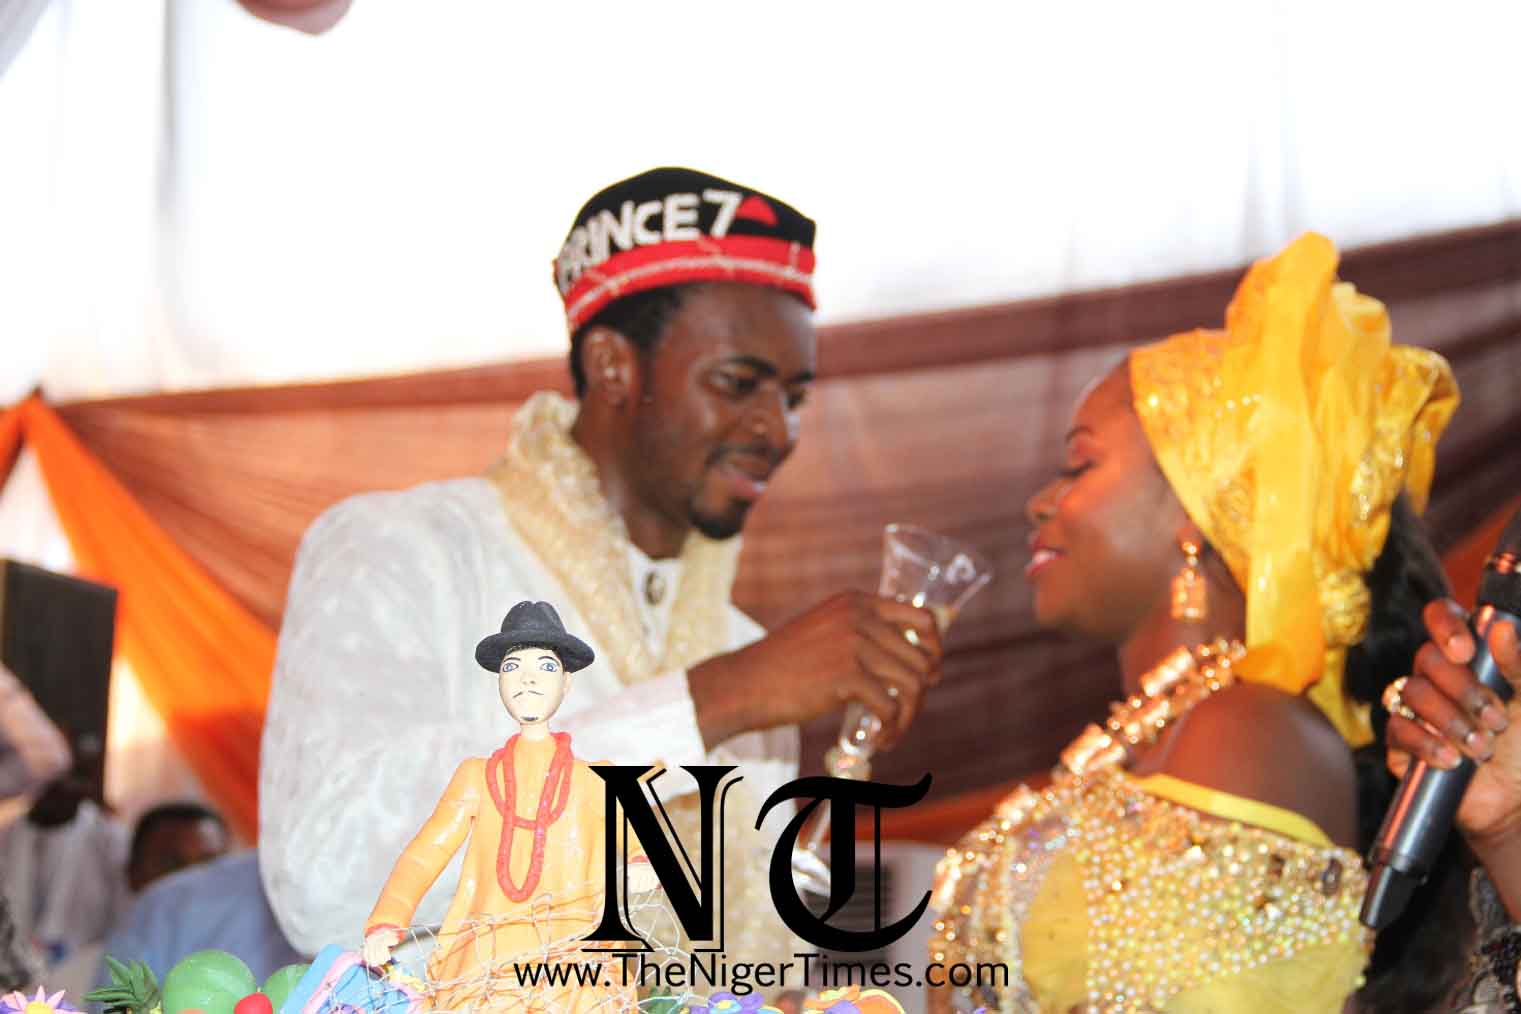 The-niger-times-godswill-faith-wedding-Traditional-Bayelsa-goddluck-59.jpg